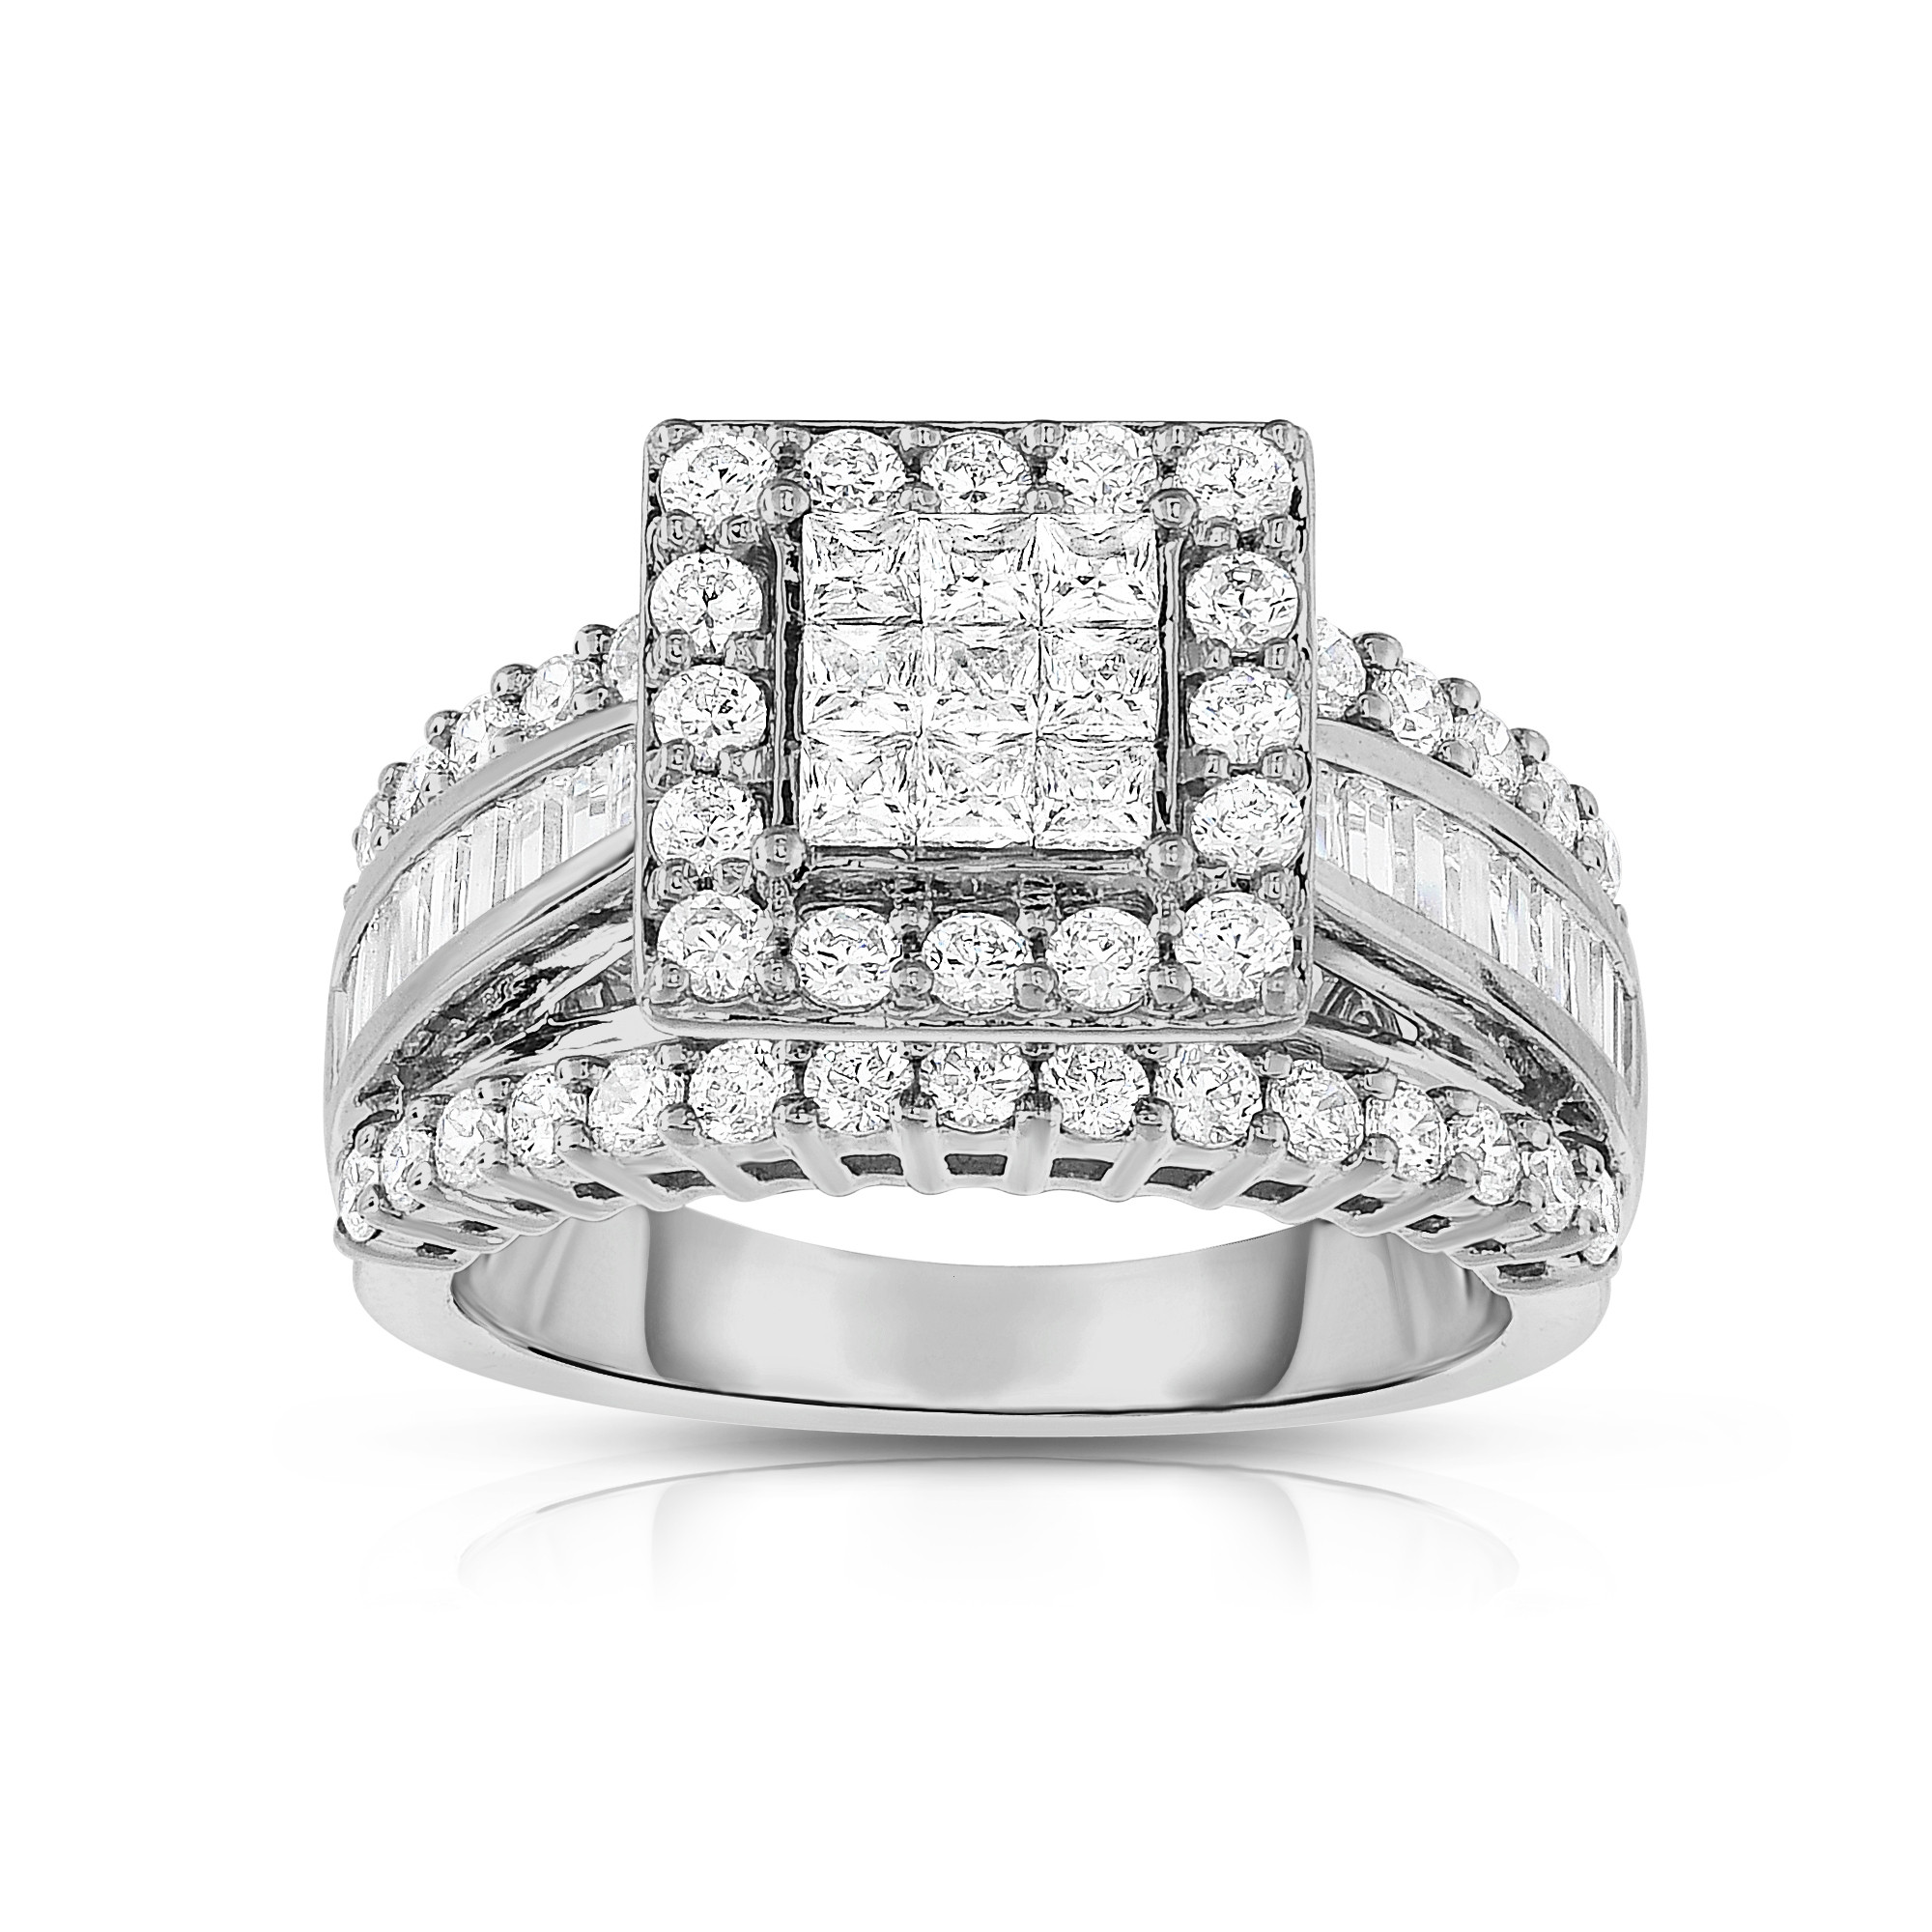 Square Diamond Wedding Rings
 2 cttw Square Cut 14K White Gold Diamond Engagement Ring